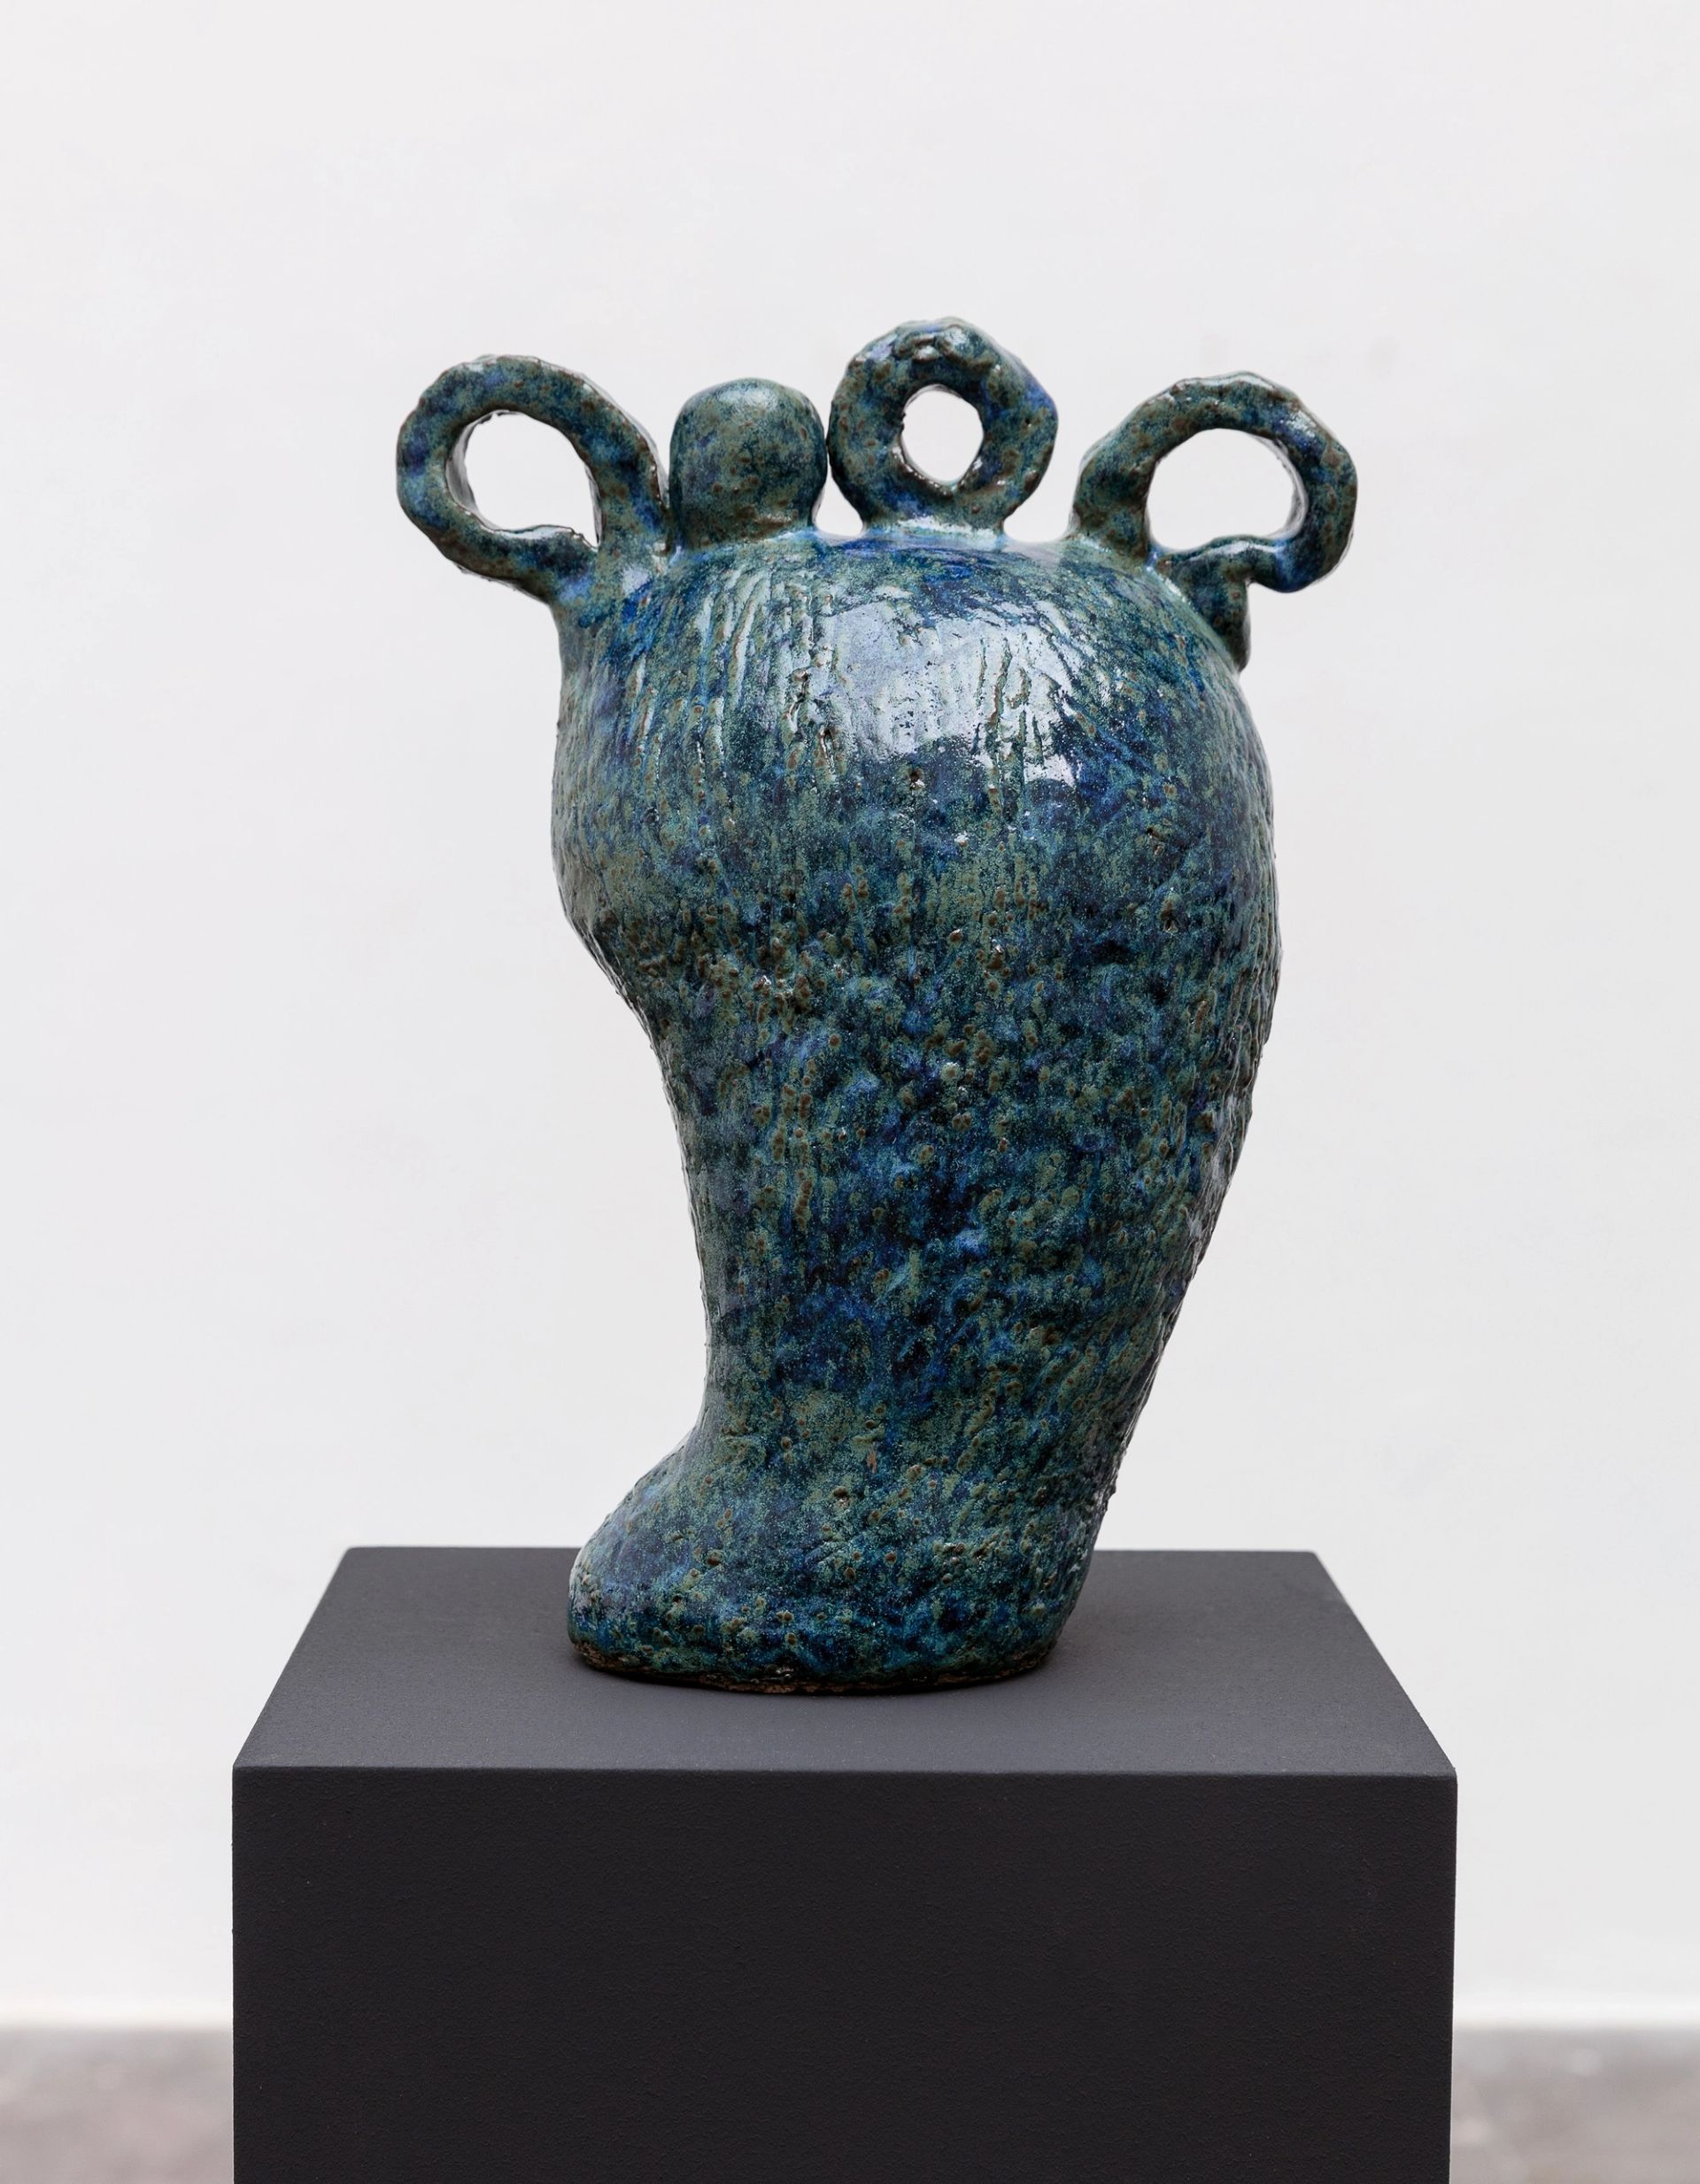 Untitled, 2020, glazed ceramic, 31 × 22.5 × 11 cm